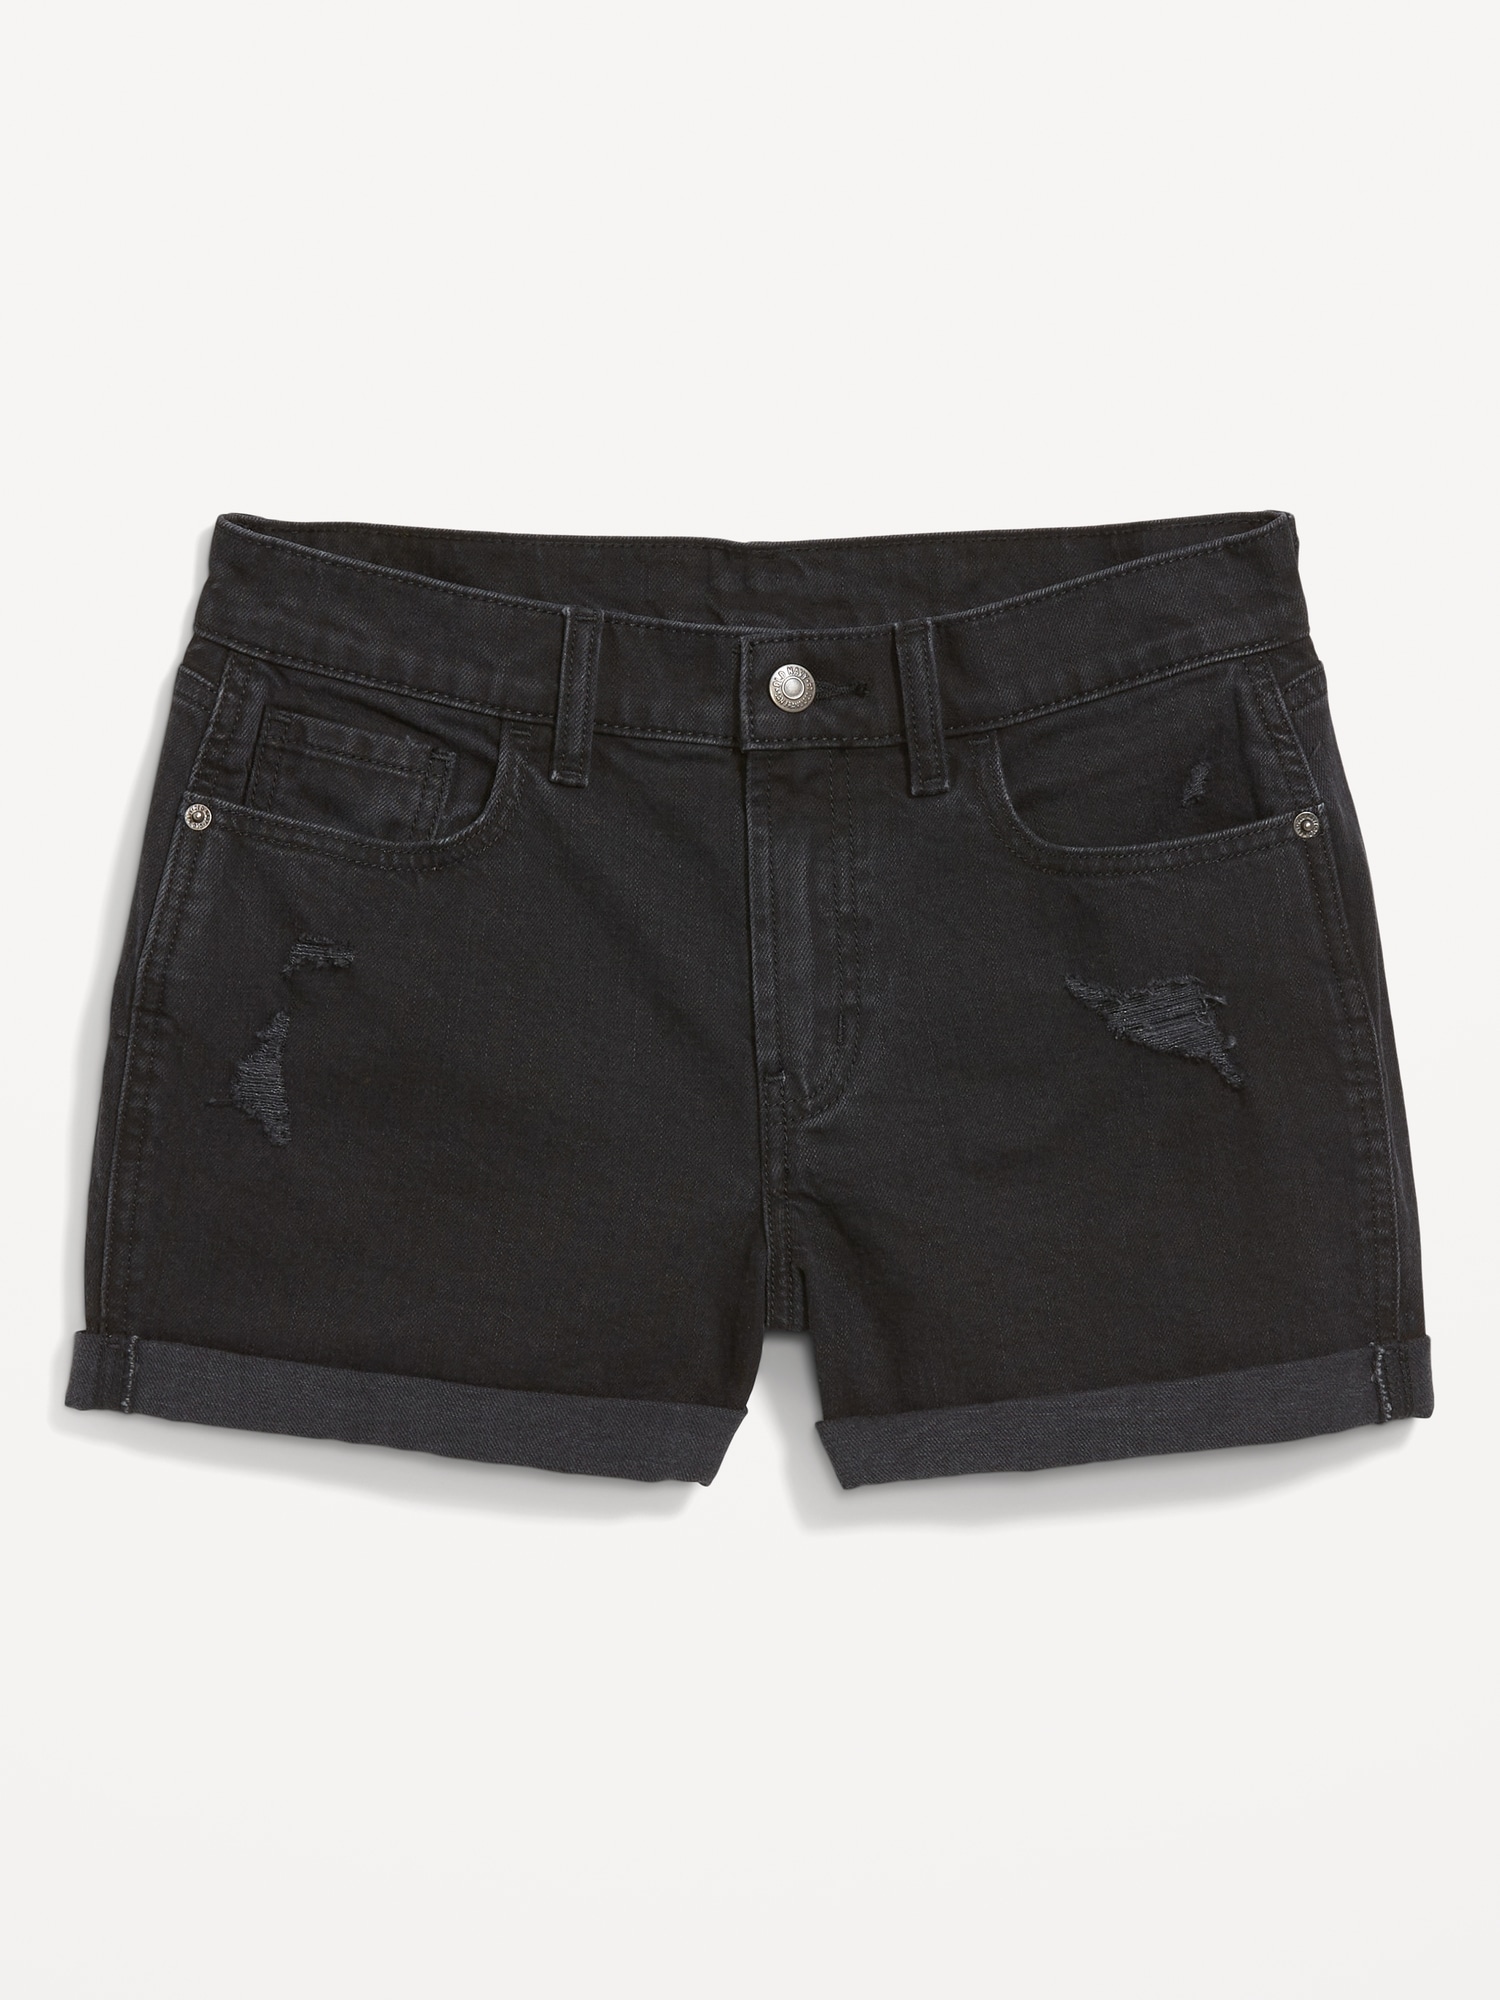 Edelrid Dome 3/4 Pants - Shorts Women's | Buy online | Alpinetrek.co.uk